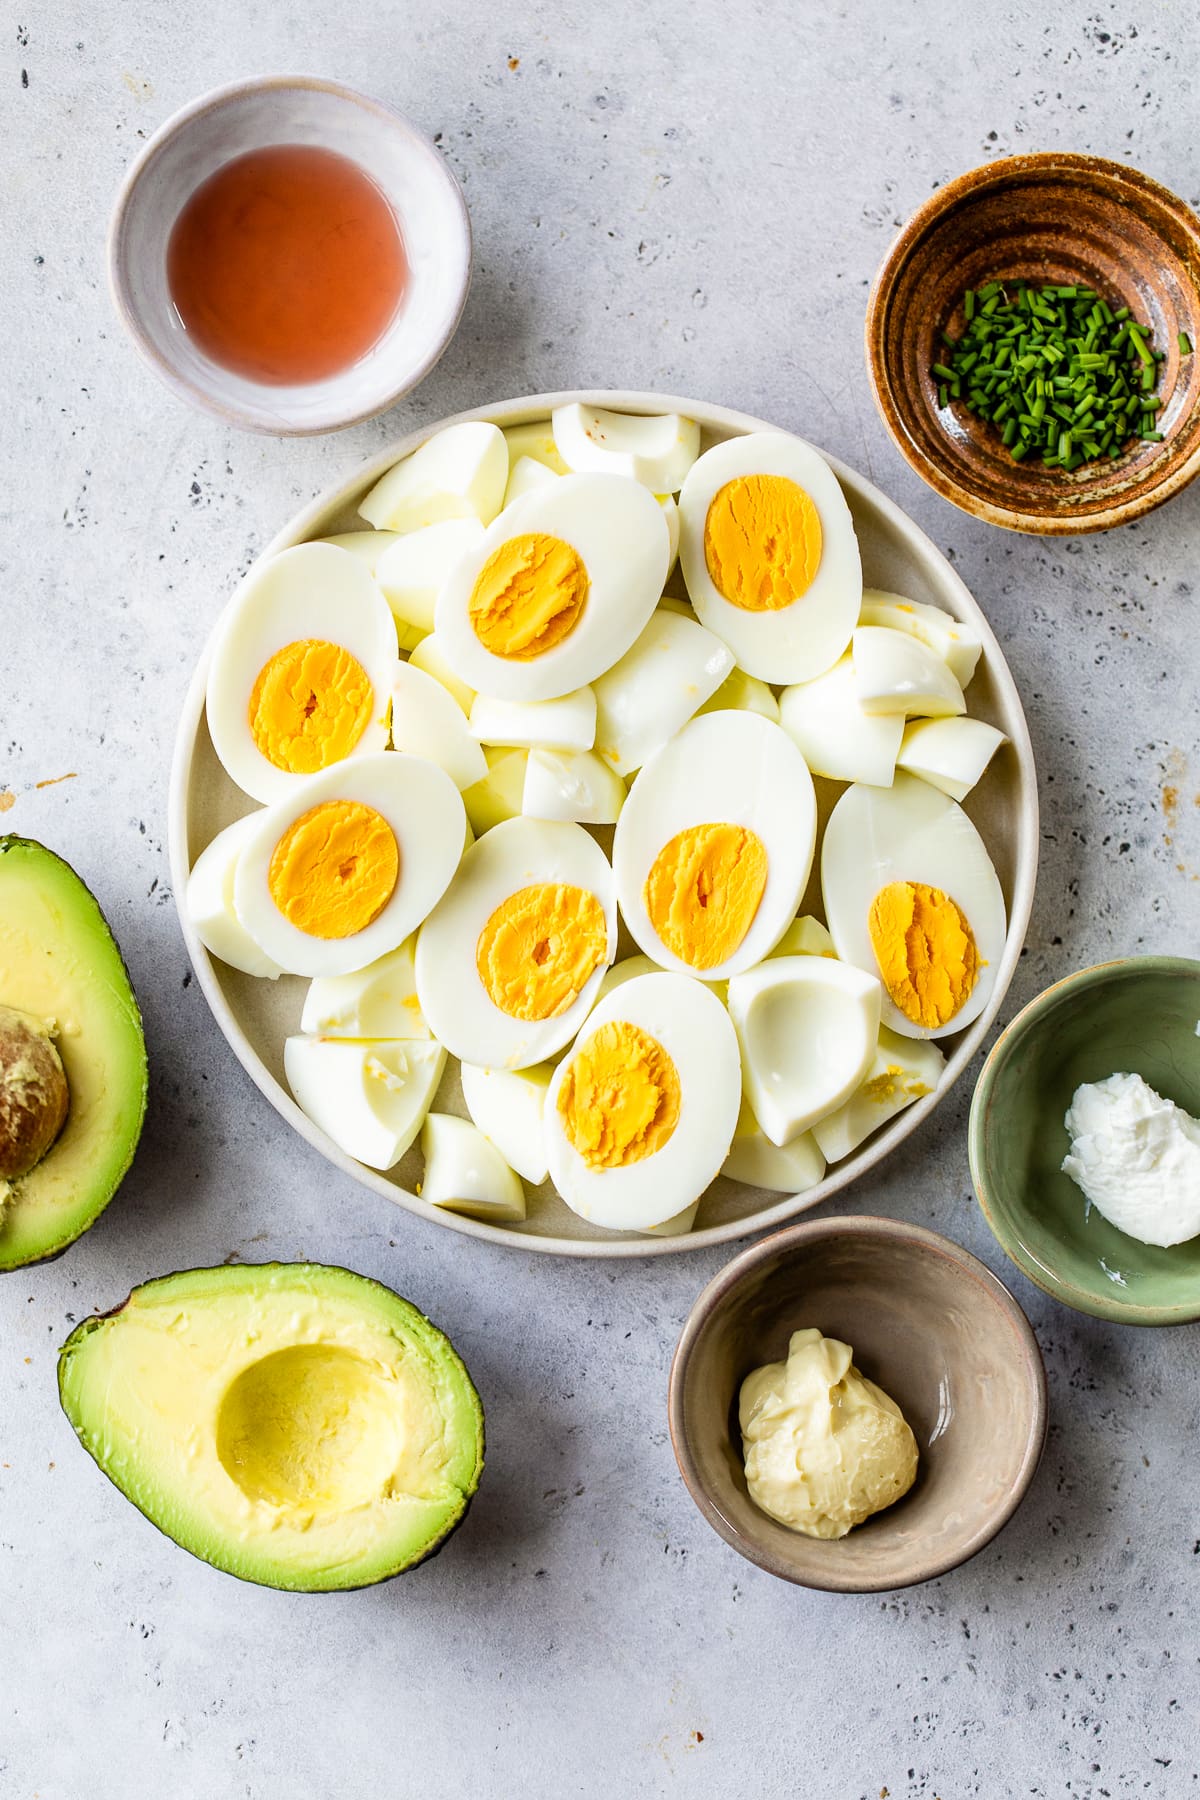 Avocado Egg Salad ingredients